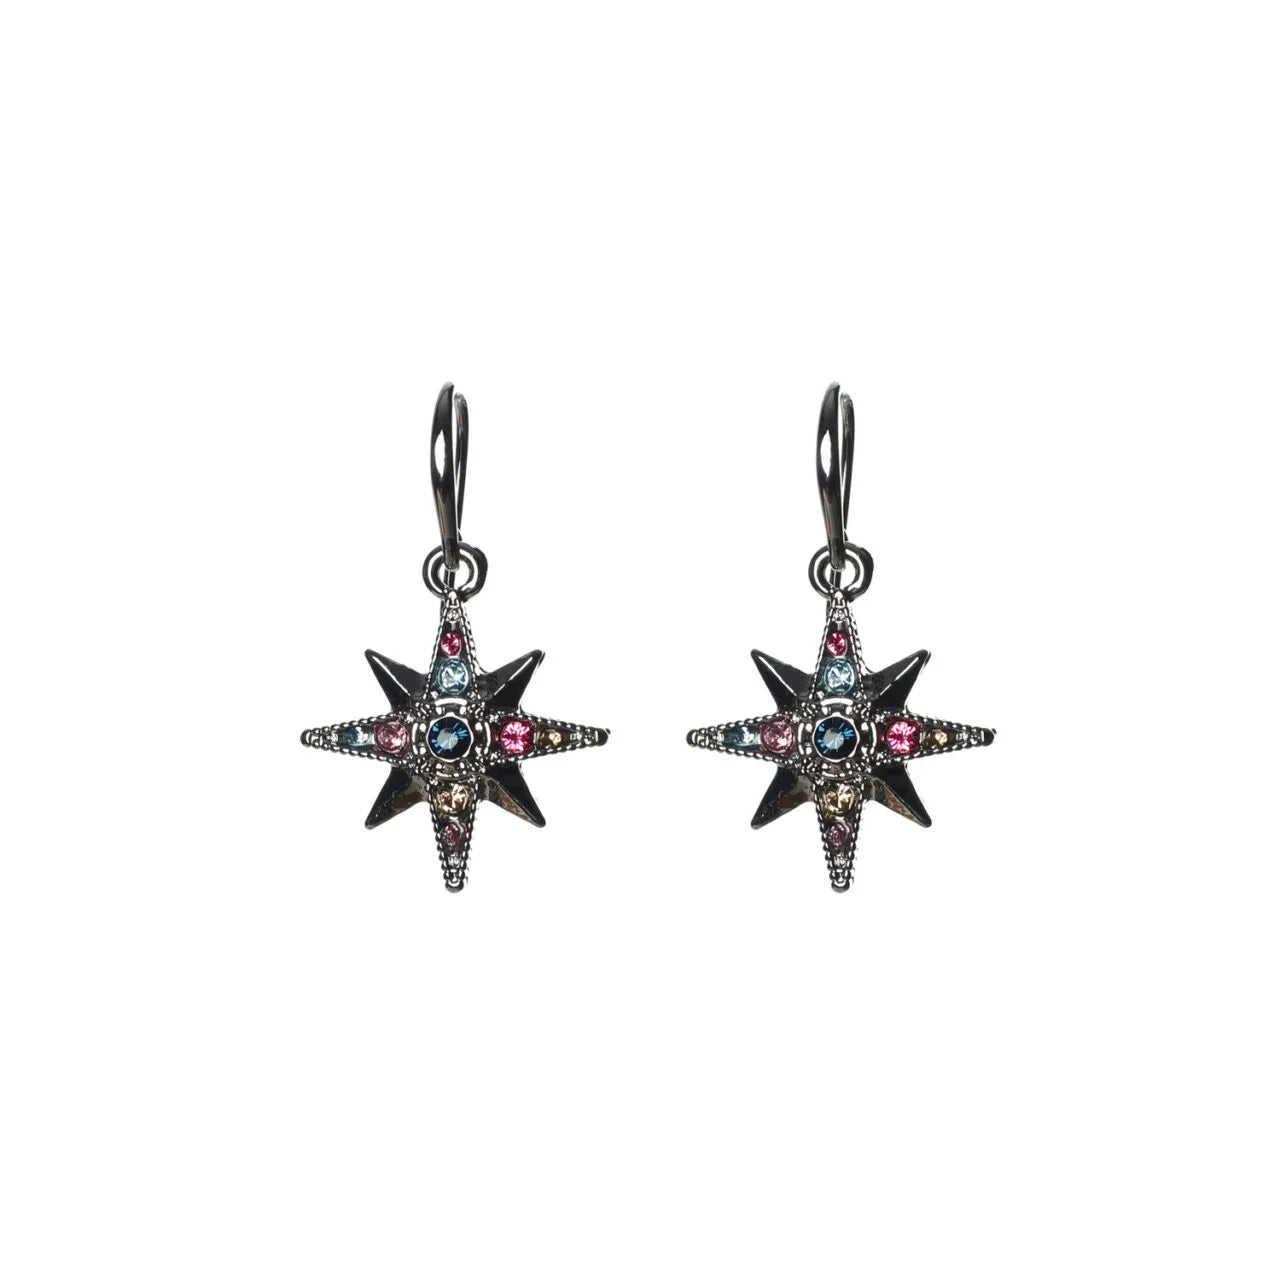 Fabulous Gifts Jewellery Earrings Star Navy Silver by Weirs of Baggot Street